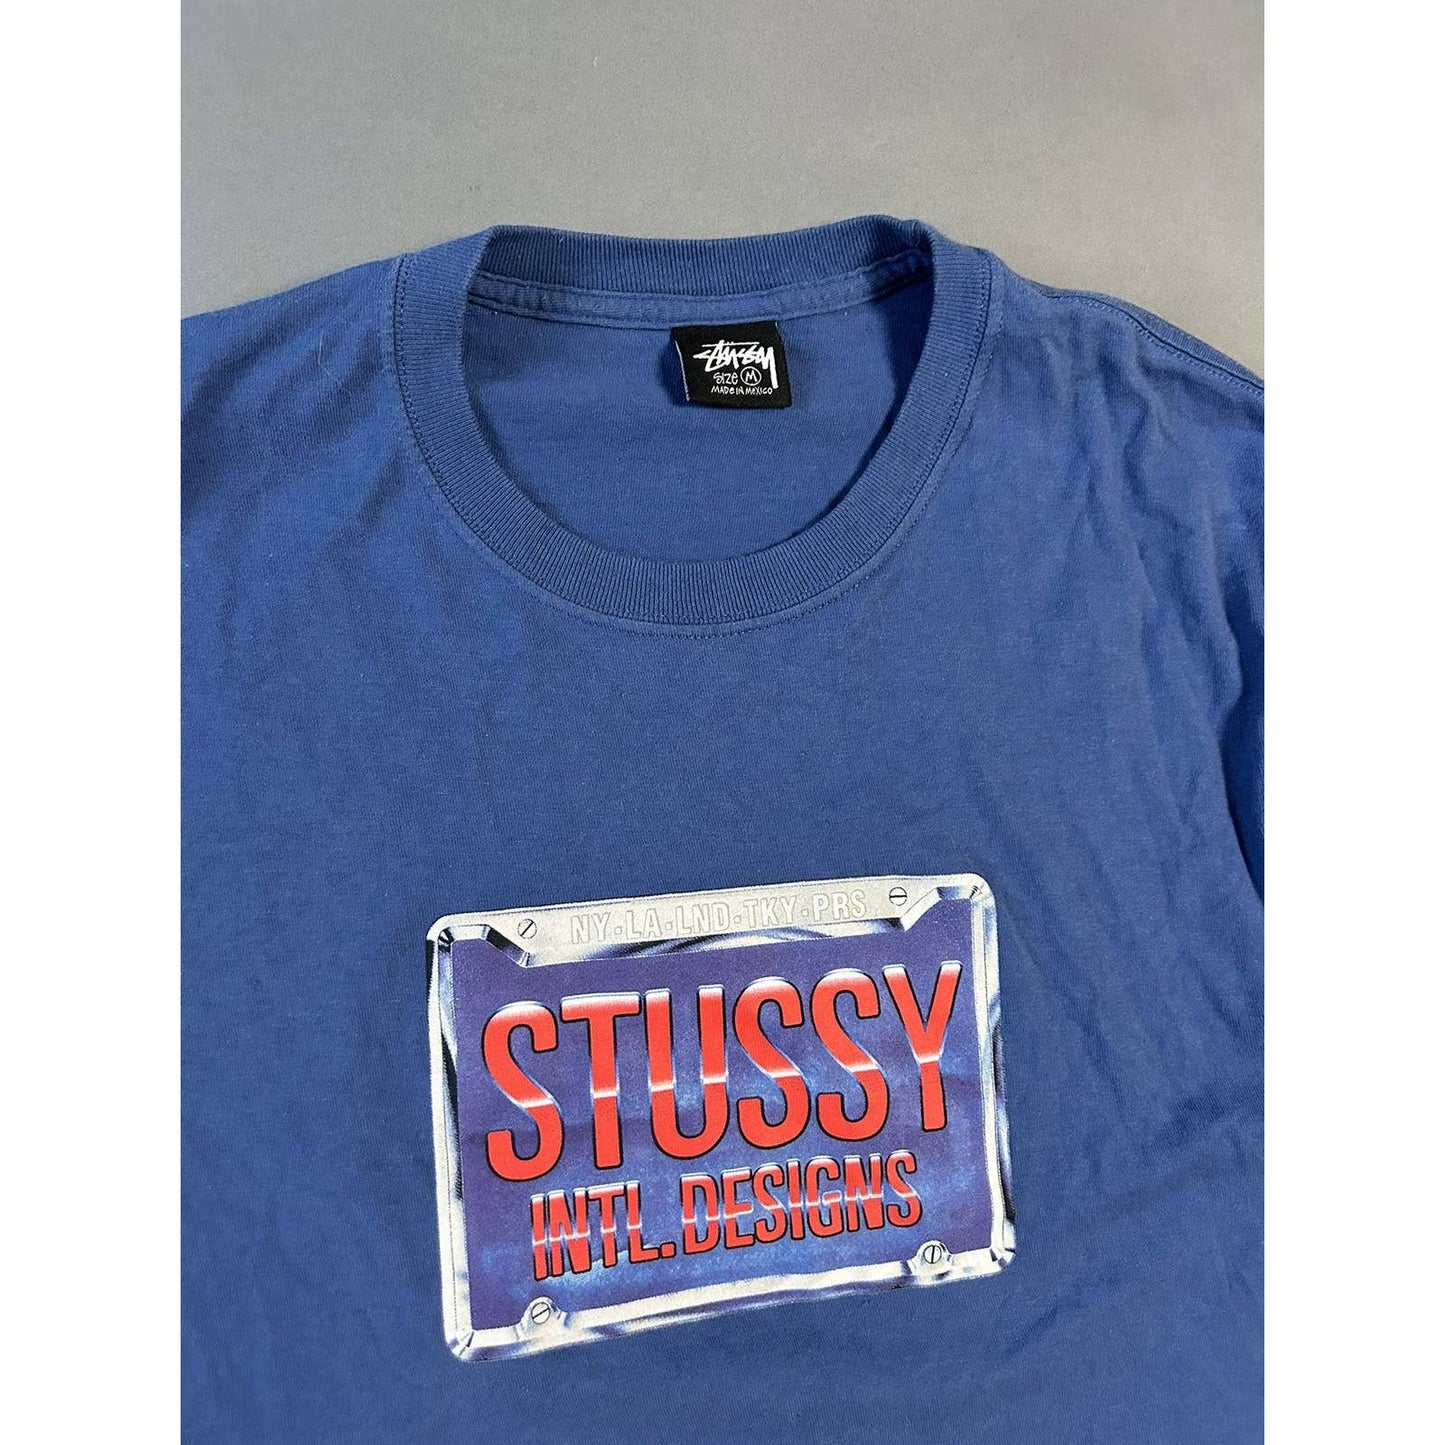 Stussy t-shirt big logo blue vintage